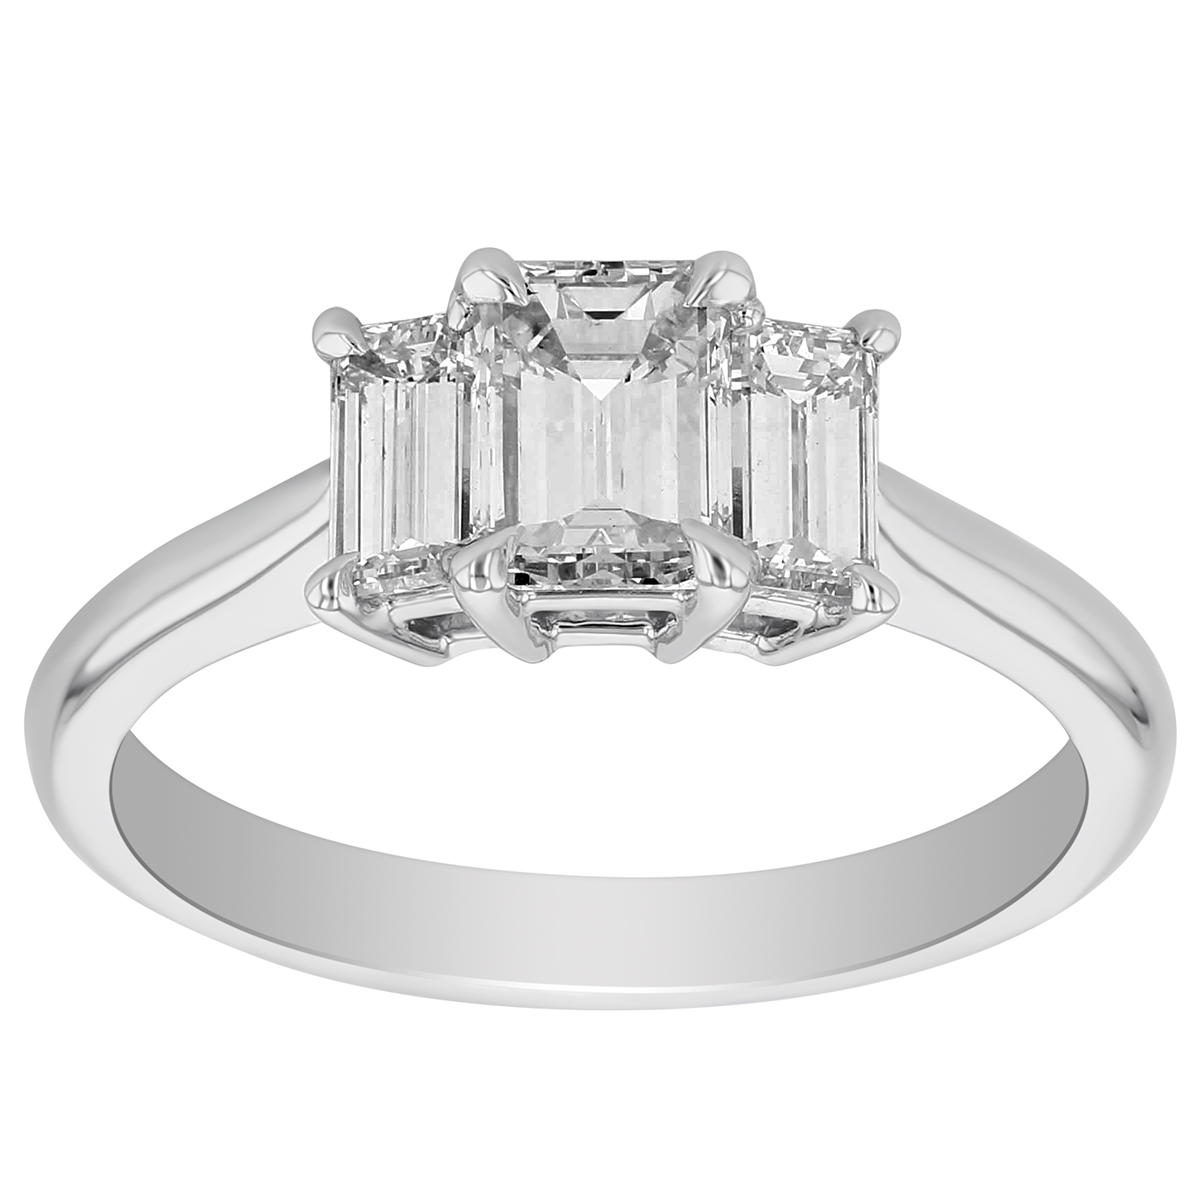 Emerald Cut Diamond 3 Stone Engagement Ring in White Gold | Borsheims